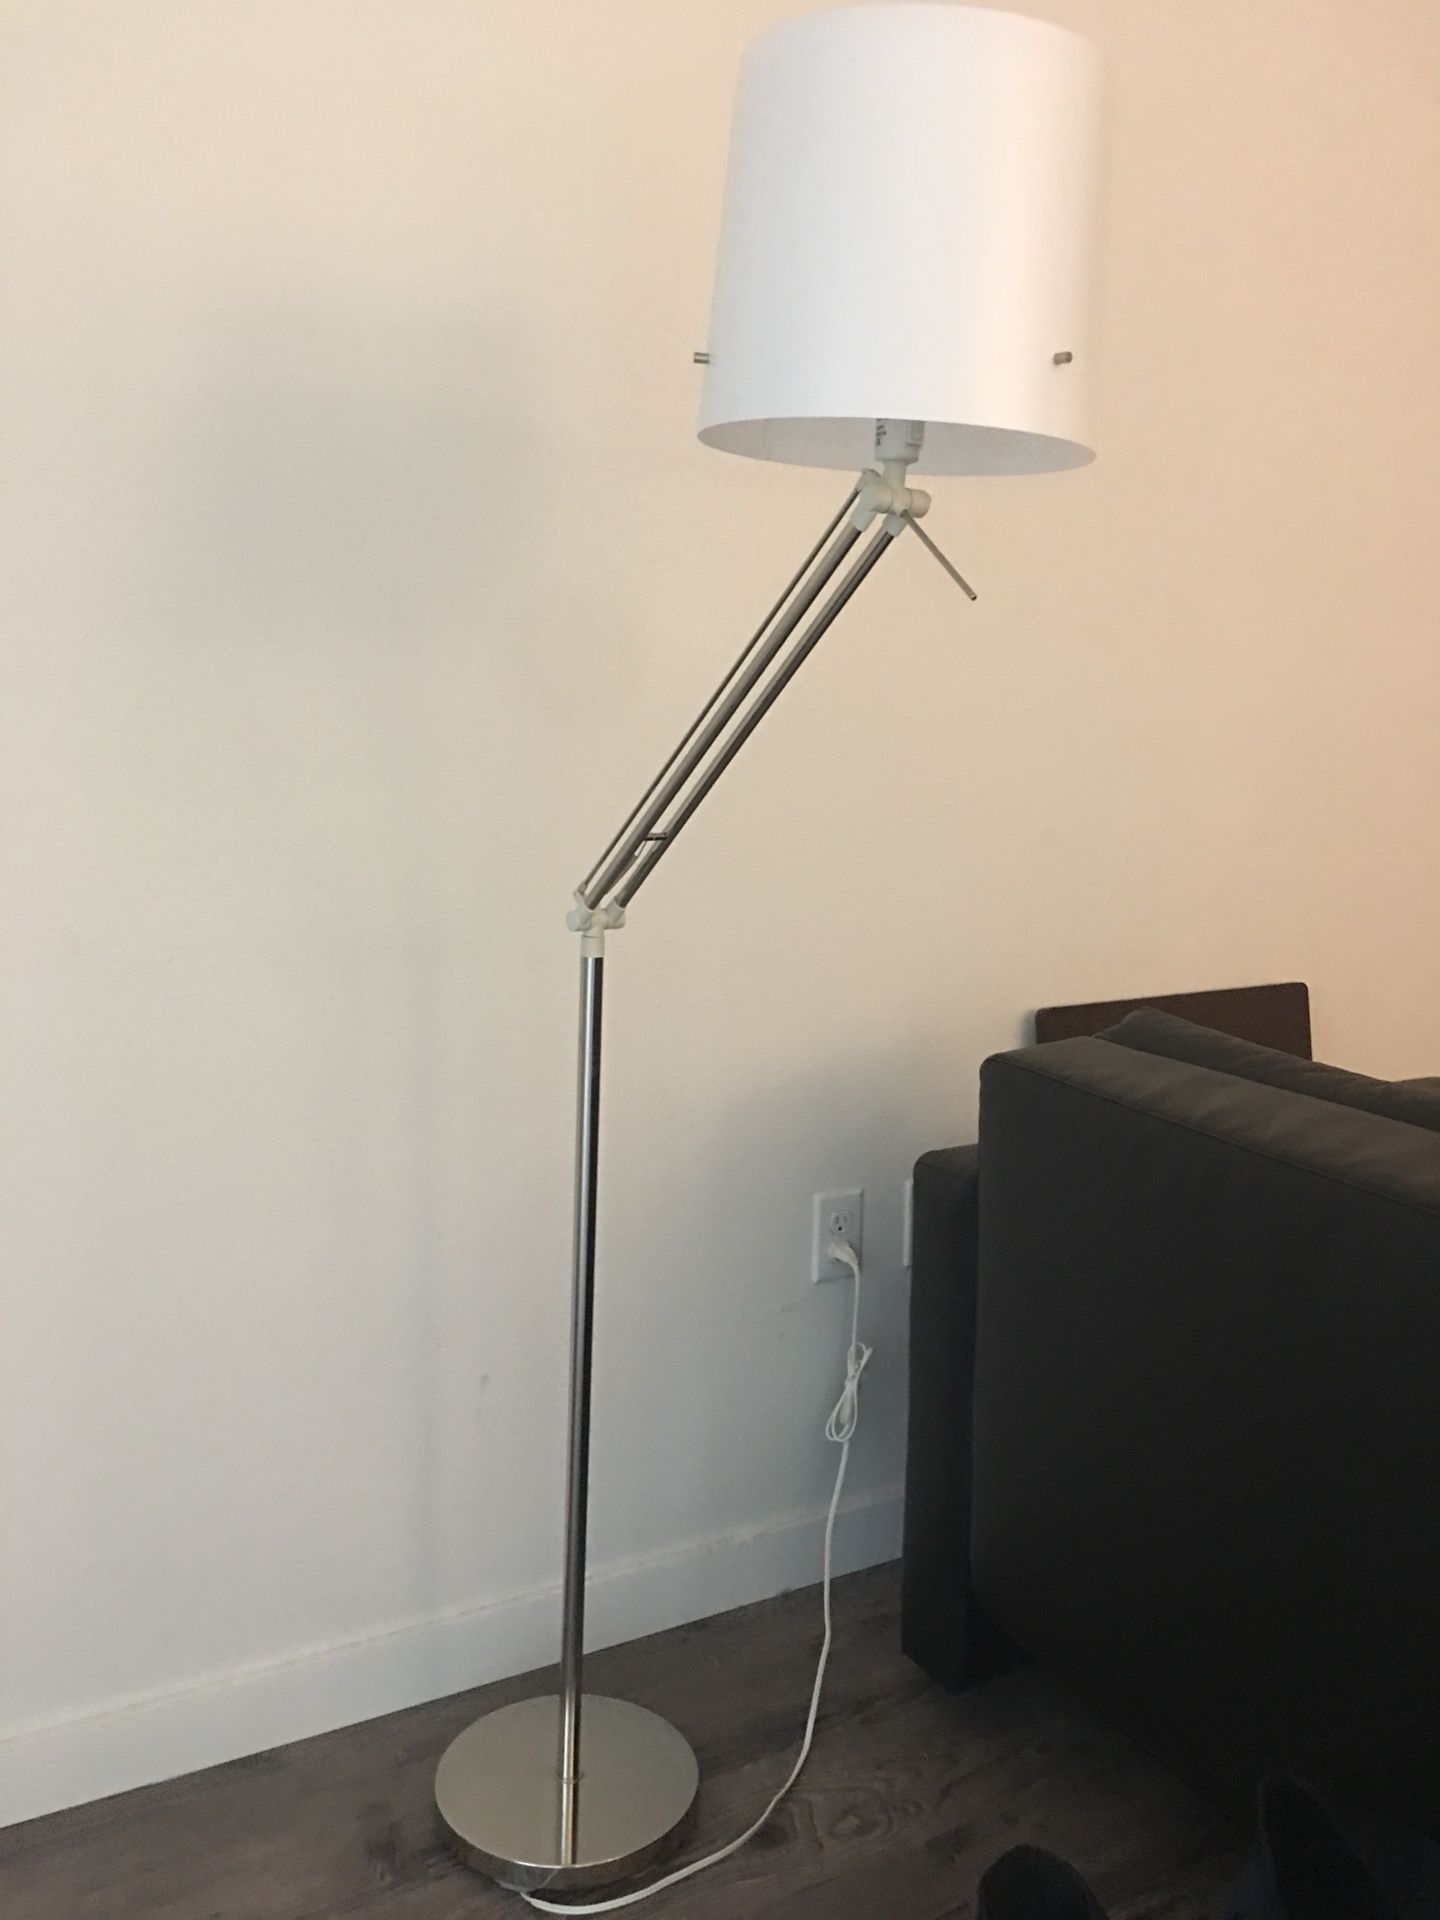 في خطر سعيد الحظ مصيري  Ikea SAMTID floor lamp with LED bulb, nickel plated, white - $20 for Sale  in Seattle, WA - OfferUp